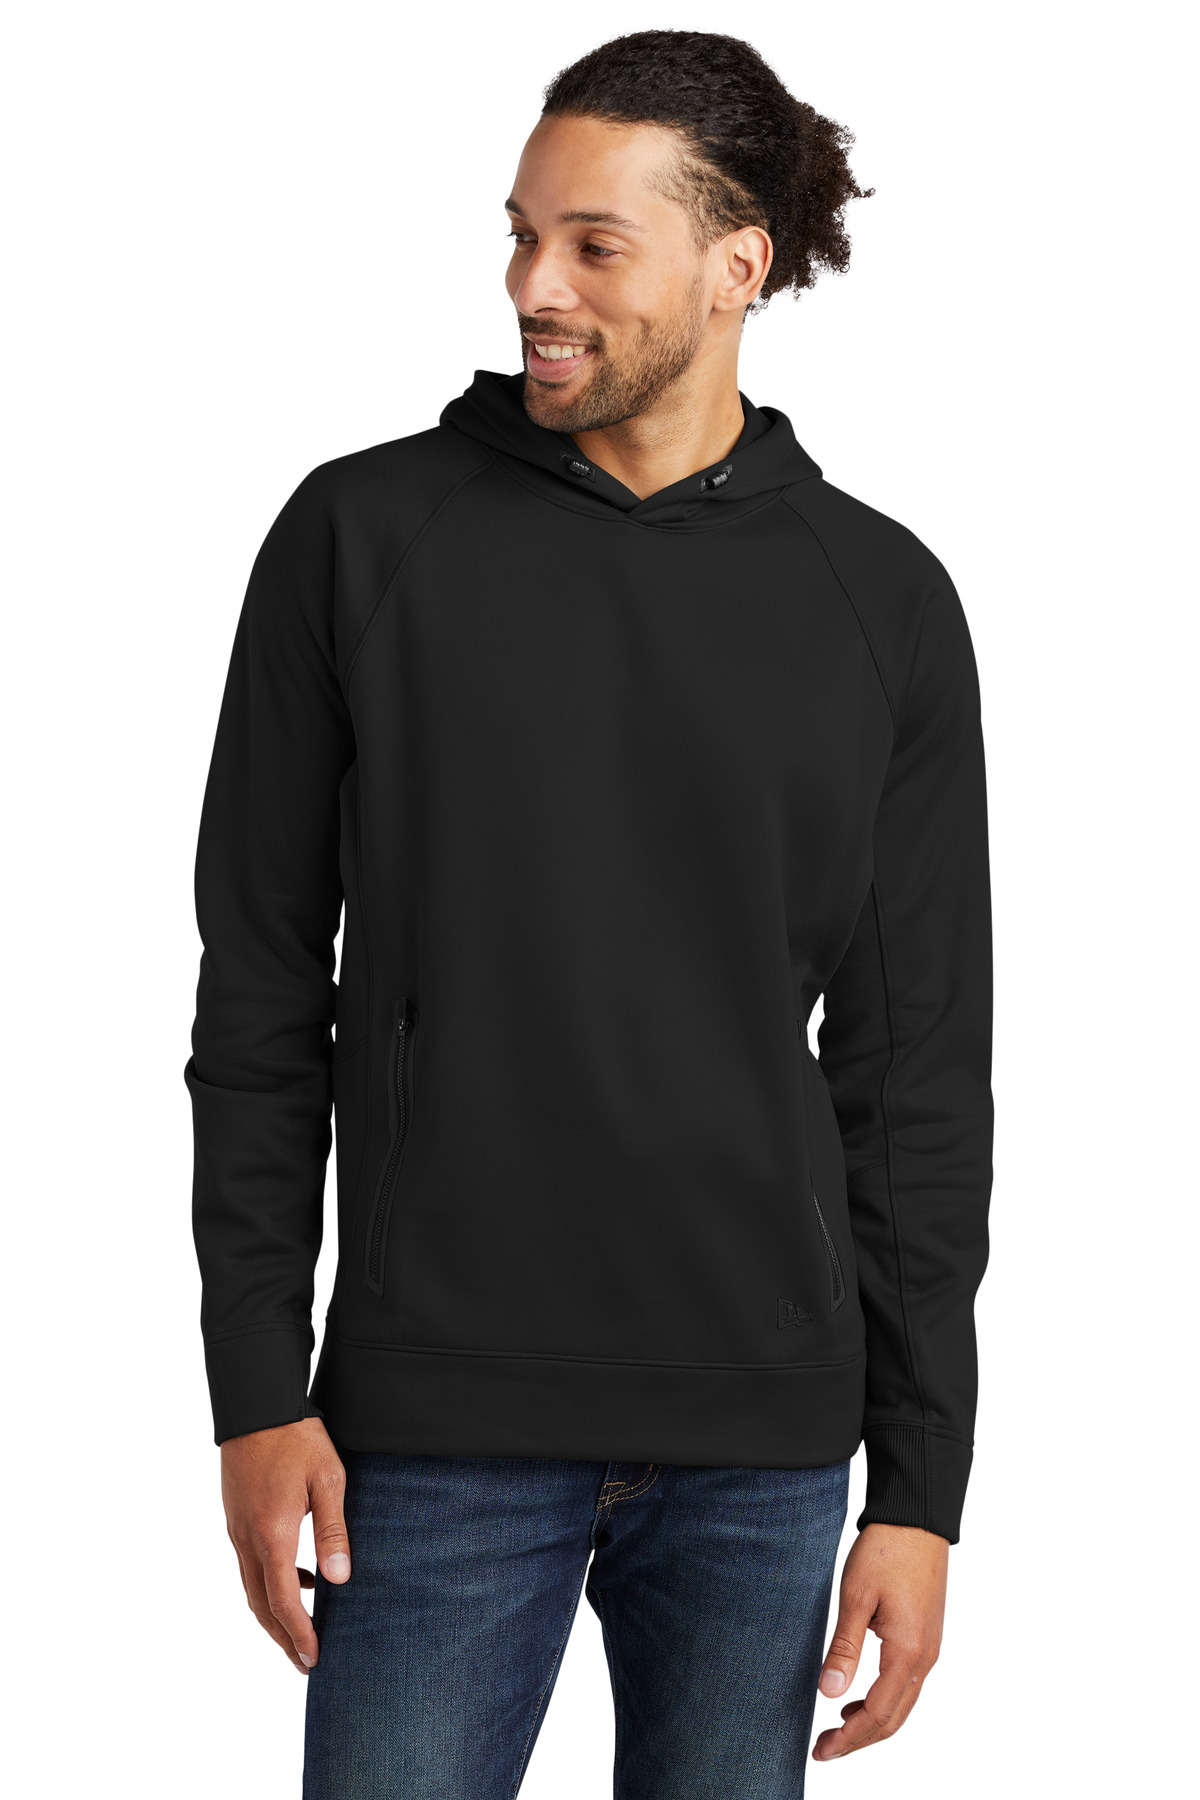 New Era Hospitality Sweatshirts & Fleece ® Venue Fleece Pullover Hoodie.-New Era